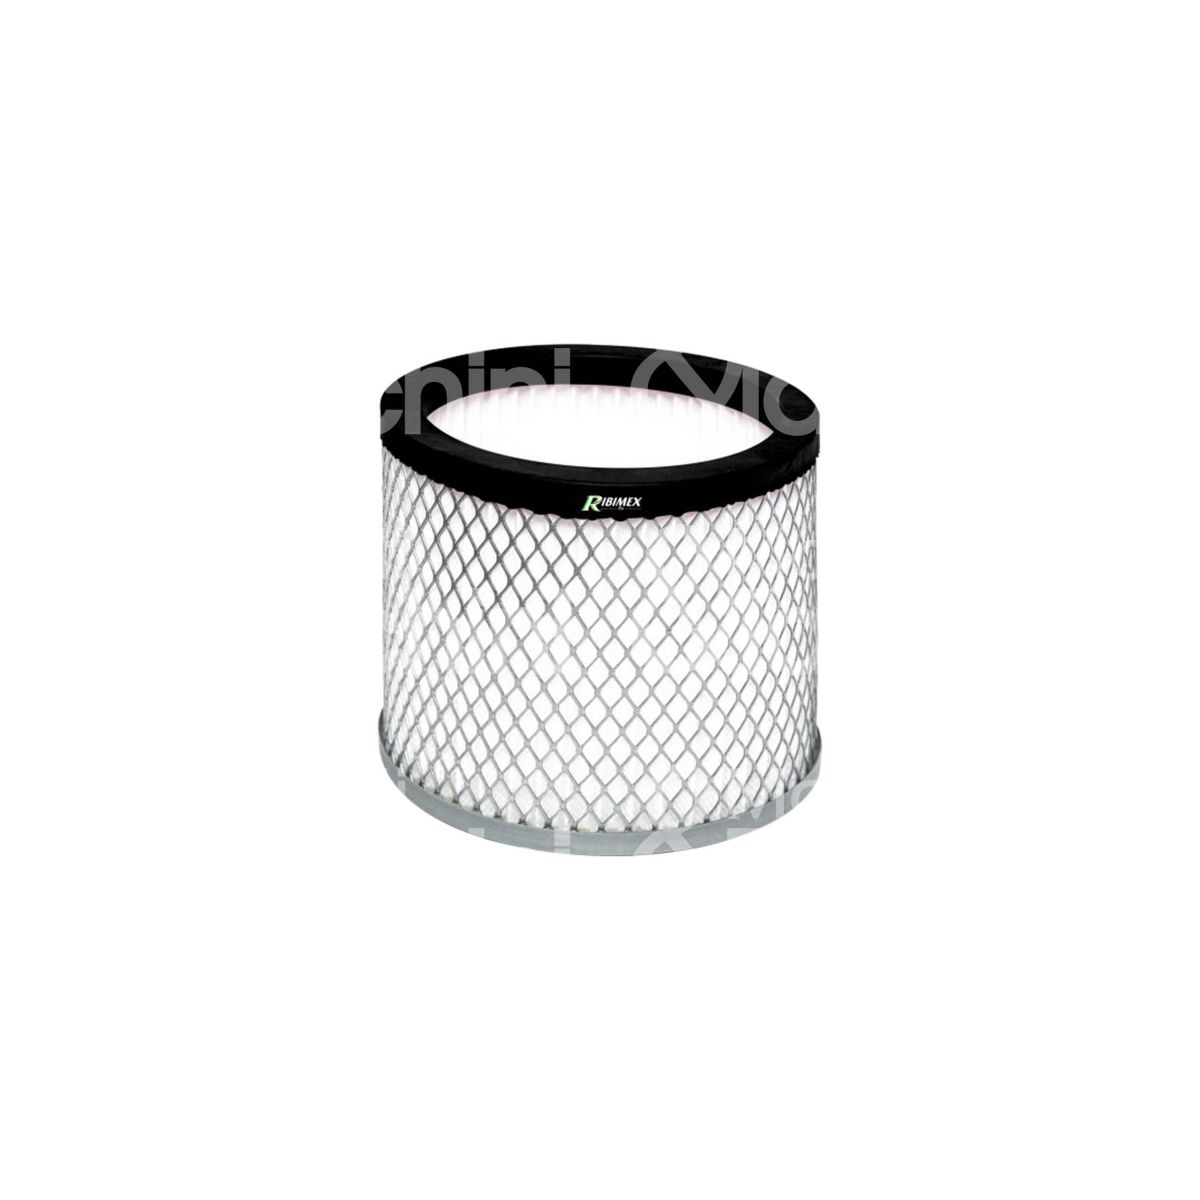 Ribimex prcen011 filtro per aspiracenere art. prcen011/hepa misura